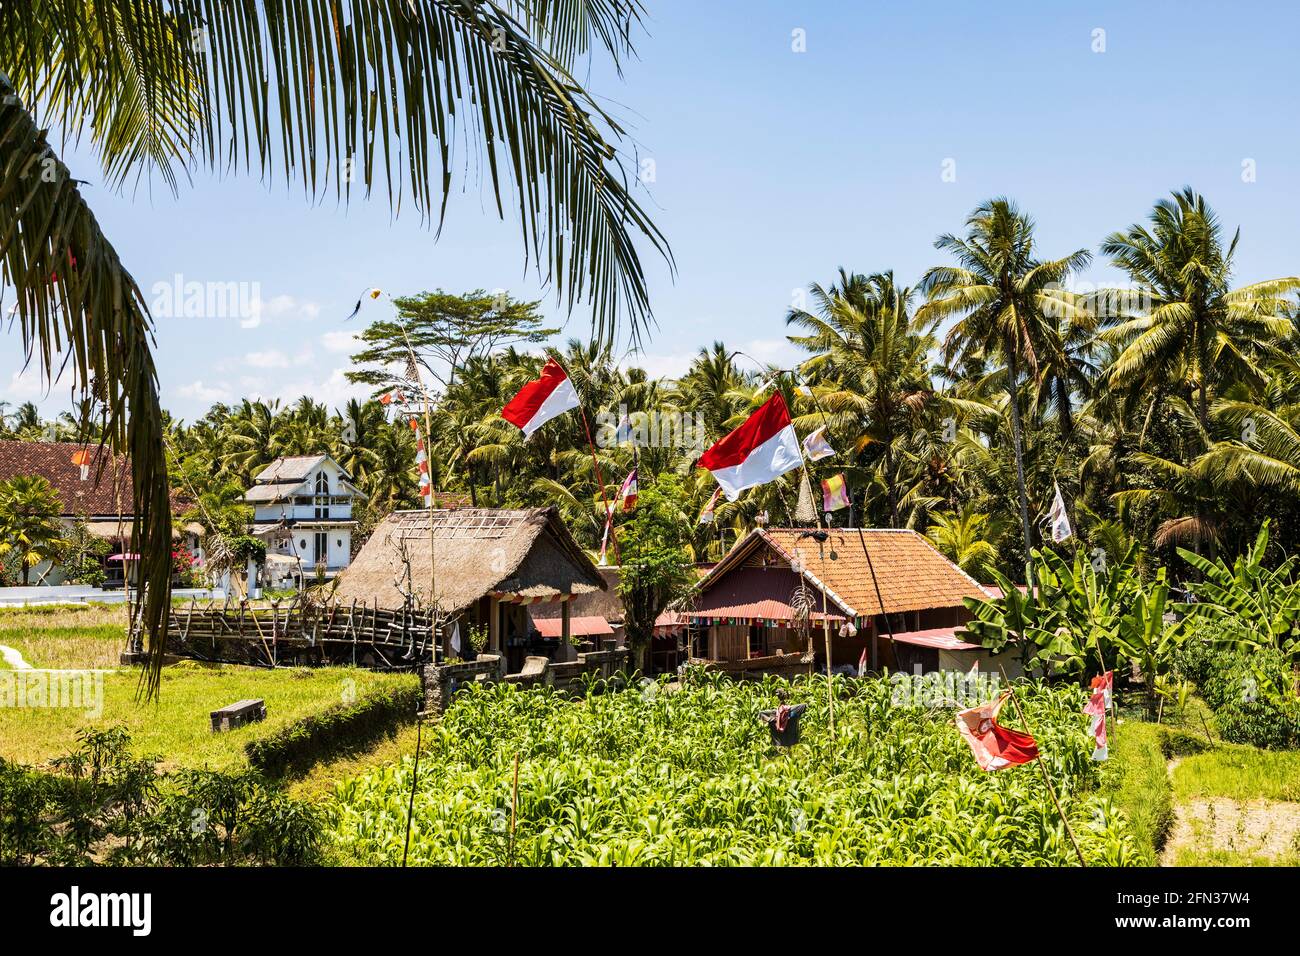 Bandiere indonesiane in zona agricola in Ubud, Bali, Indonesia, Asia sud-orientale, Asia Foto Stock